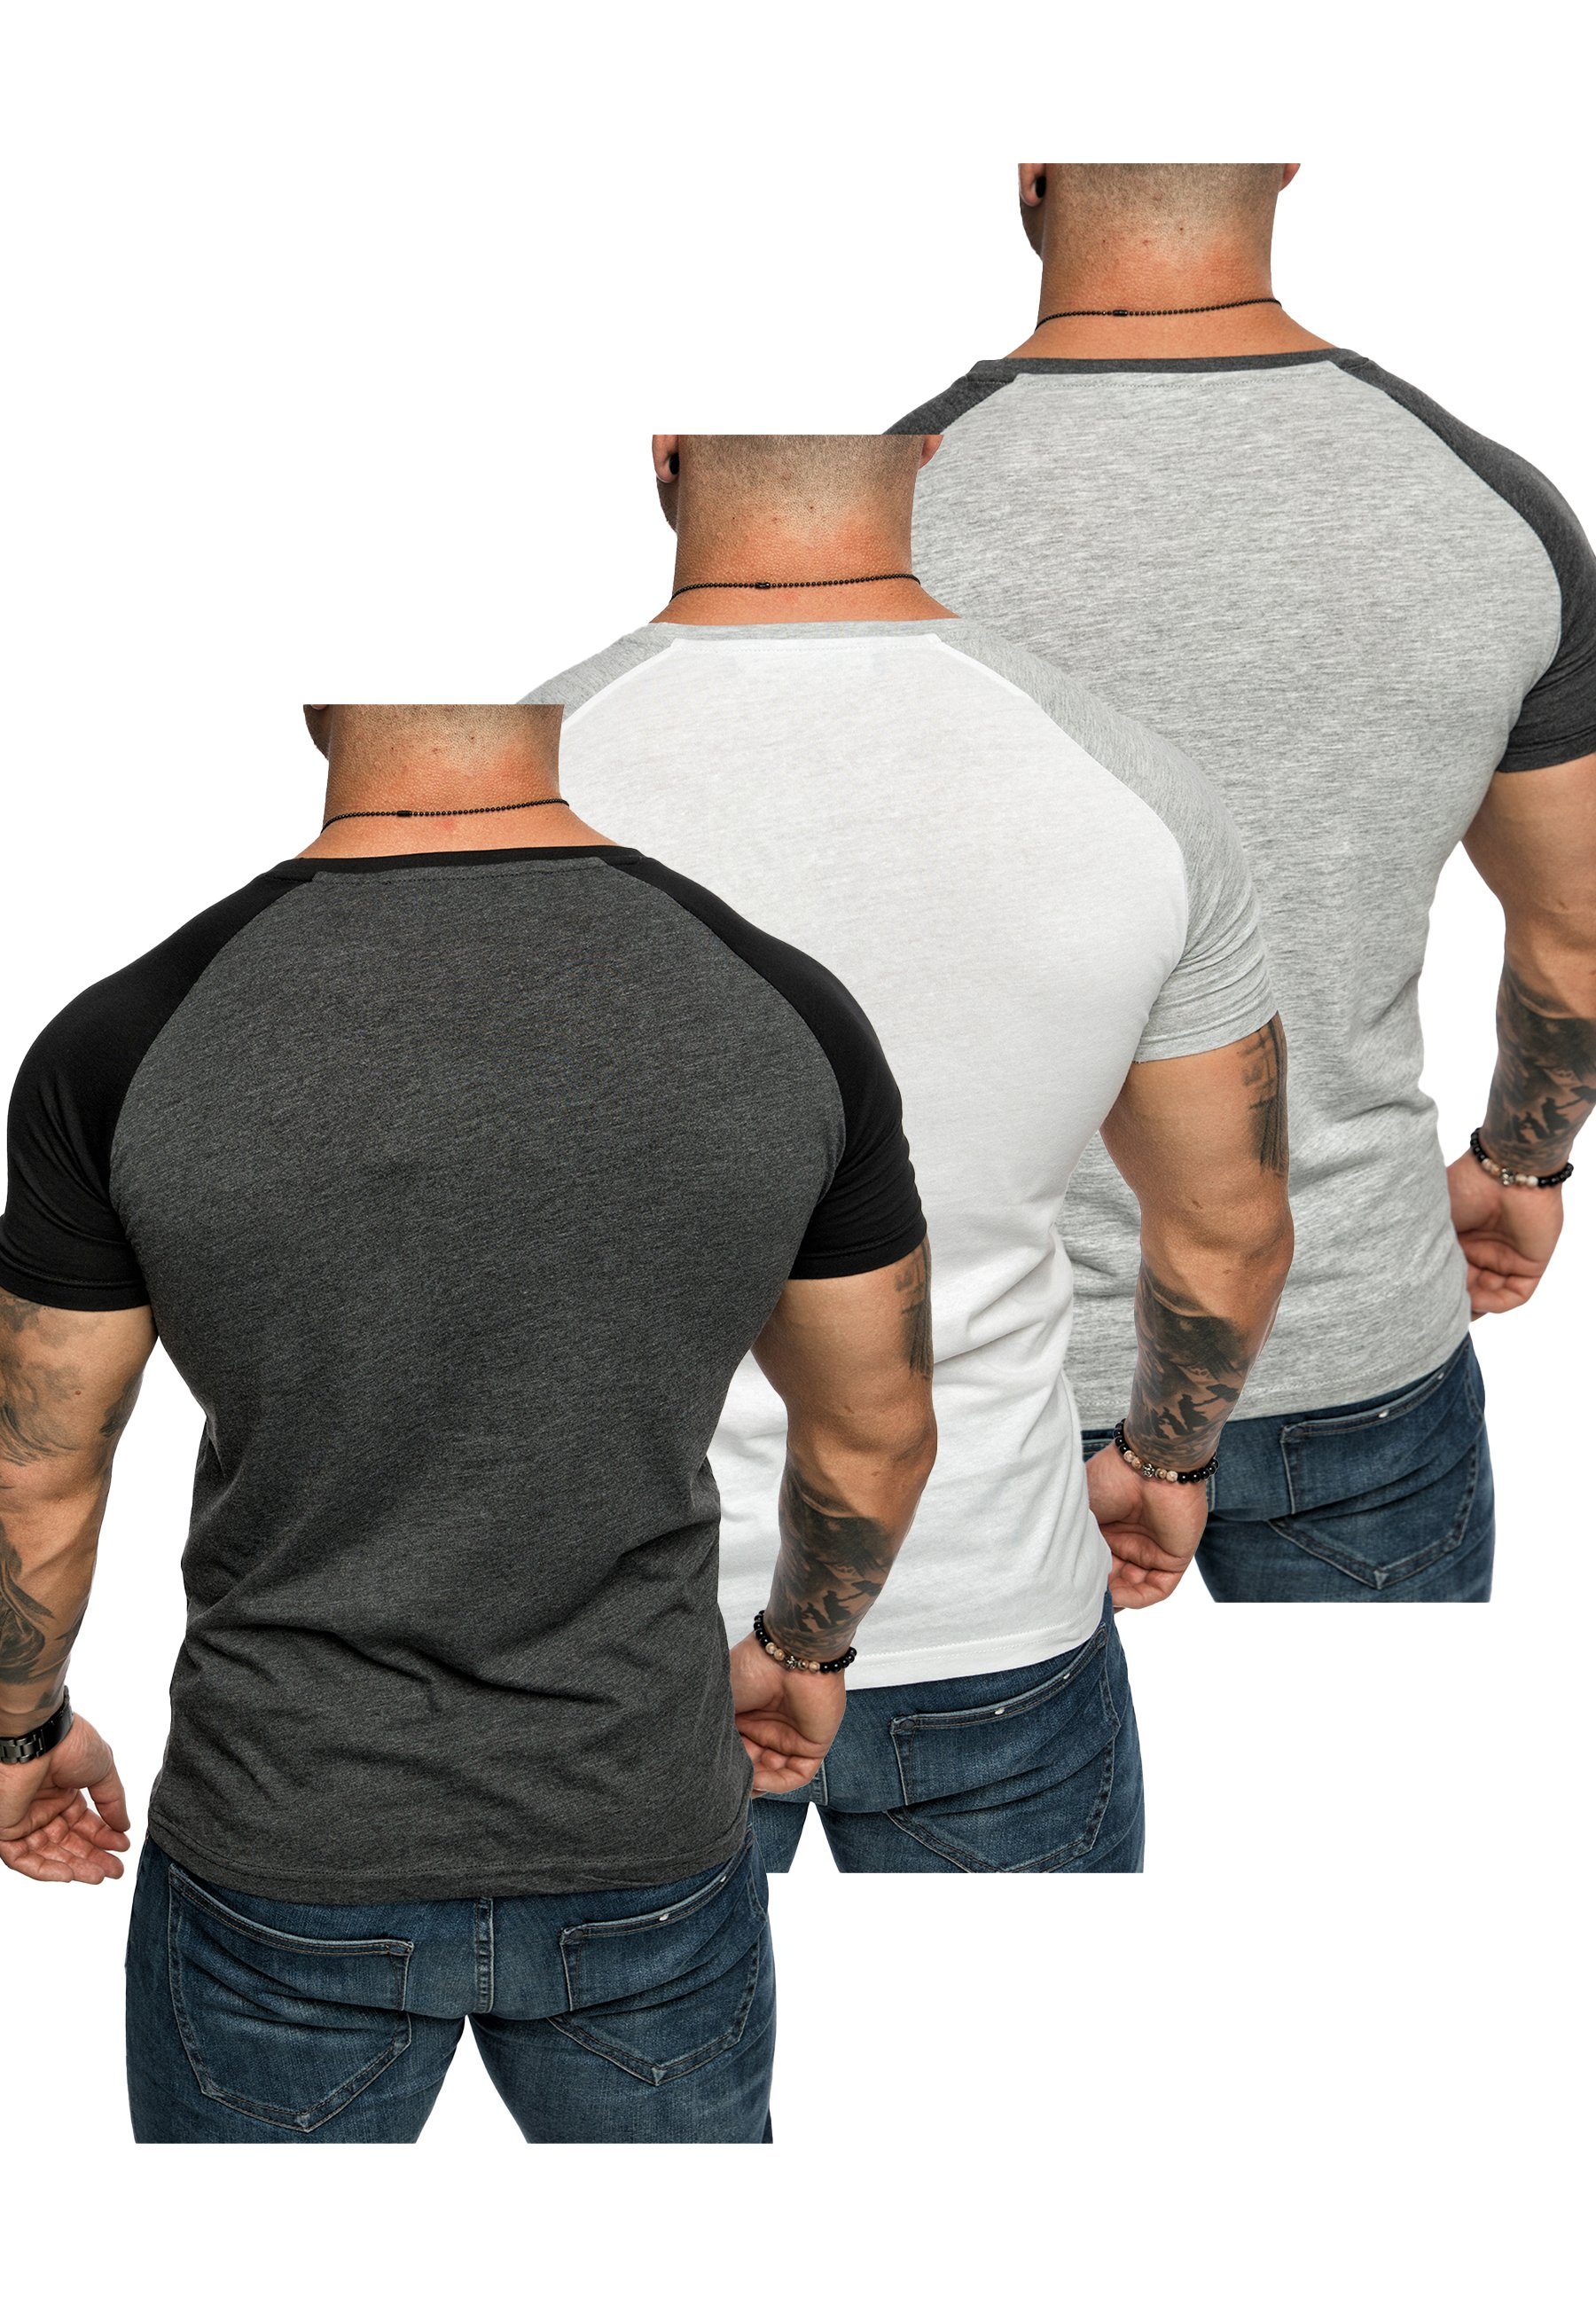 Oversize Basic Kontrast 3. + T-Shirts (Anthrazit/Schwarz T-Shirt Herren Grau/Anthrazit) (3er-Pack) Weiß/Grau + 3er-Pack T-Shirt Amaci&Sons SALEM Raglan